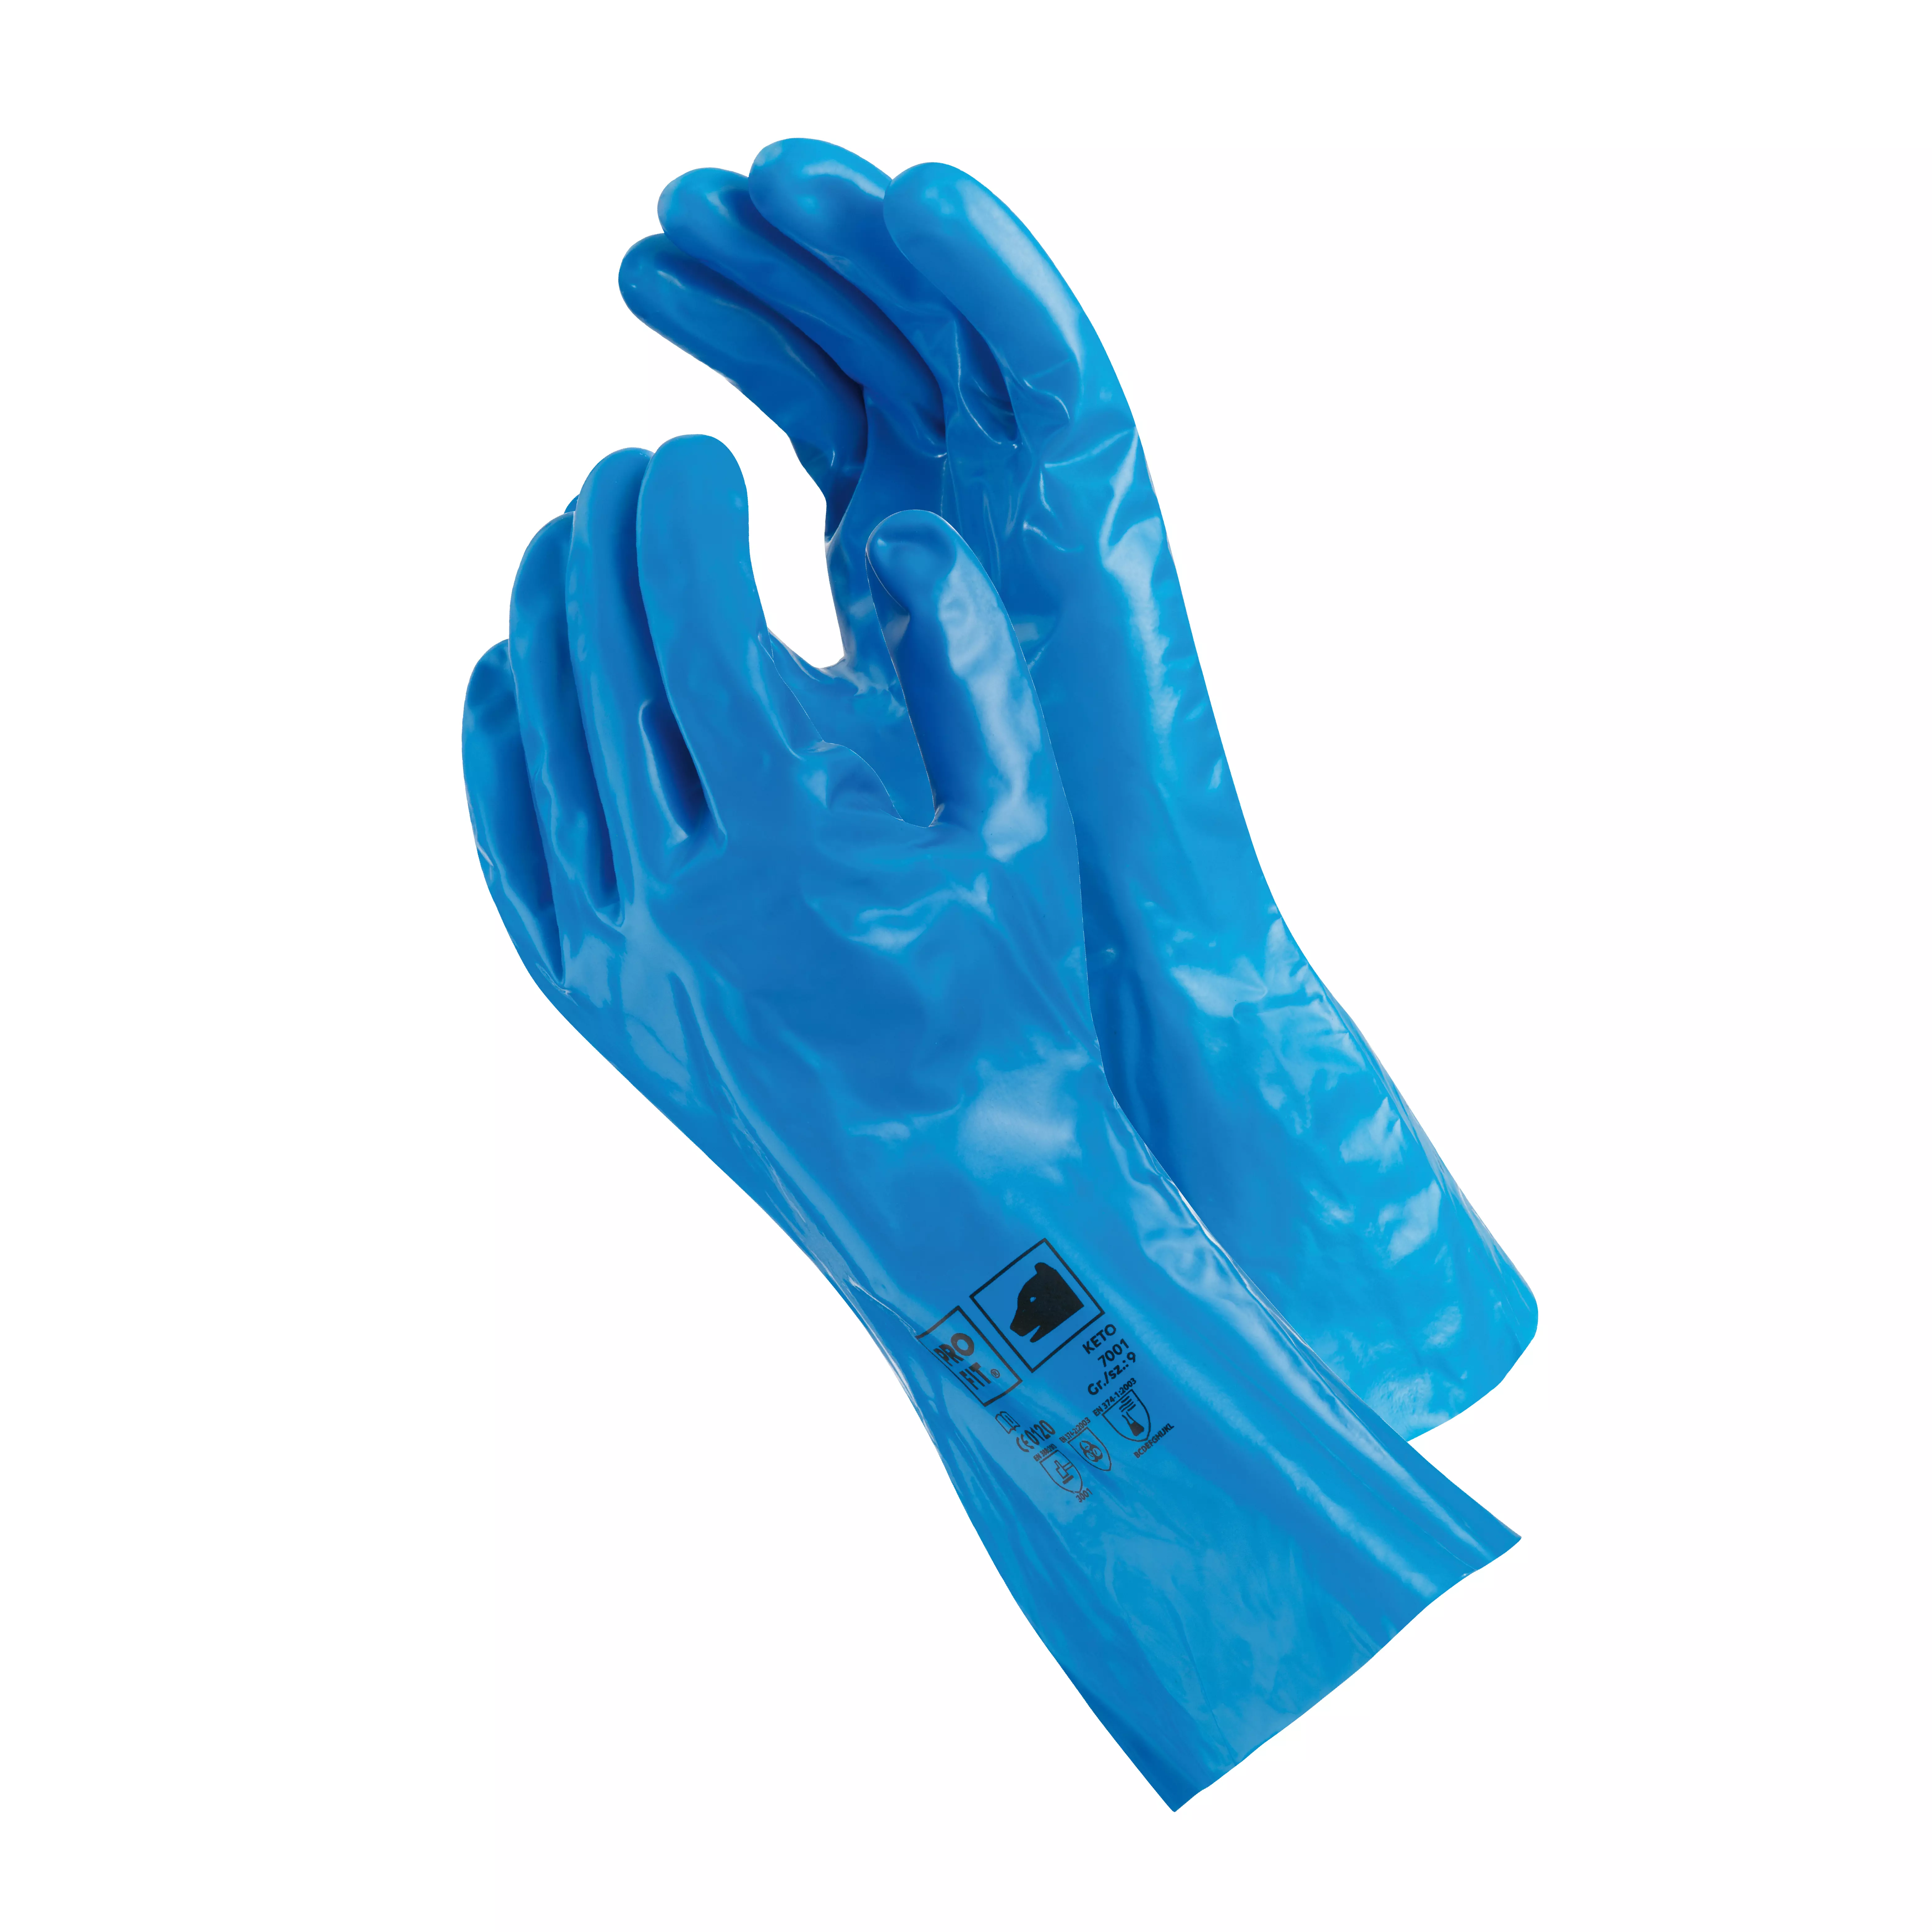 Chemikalienschutzhandschuh Keto 33 - Blau, 9